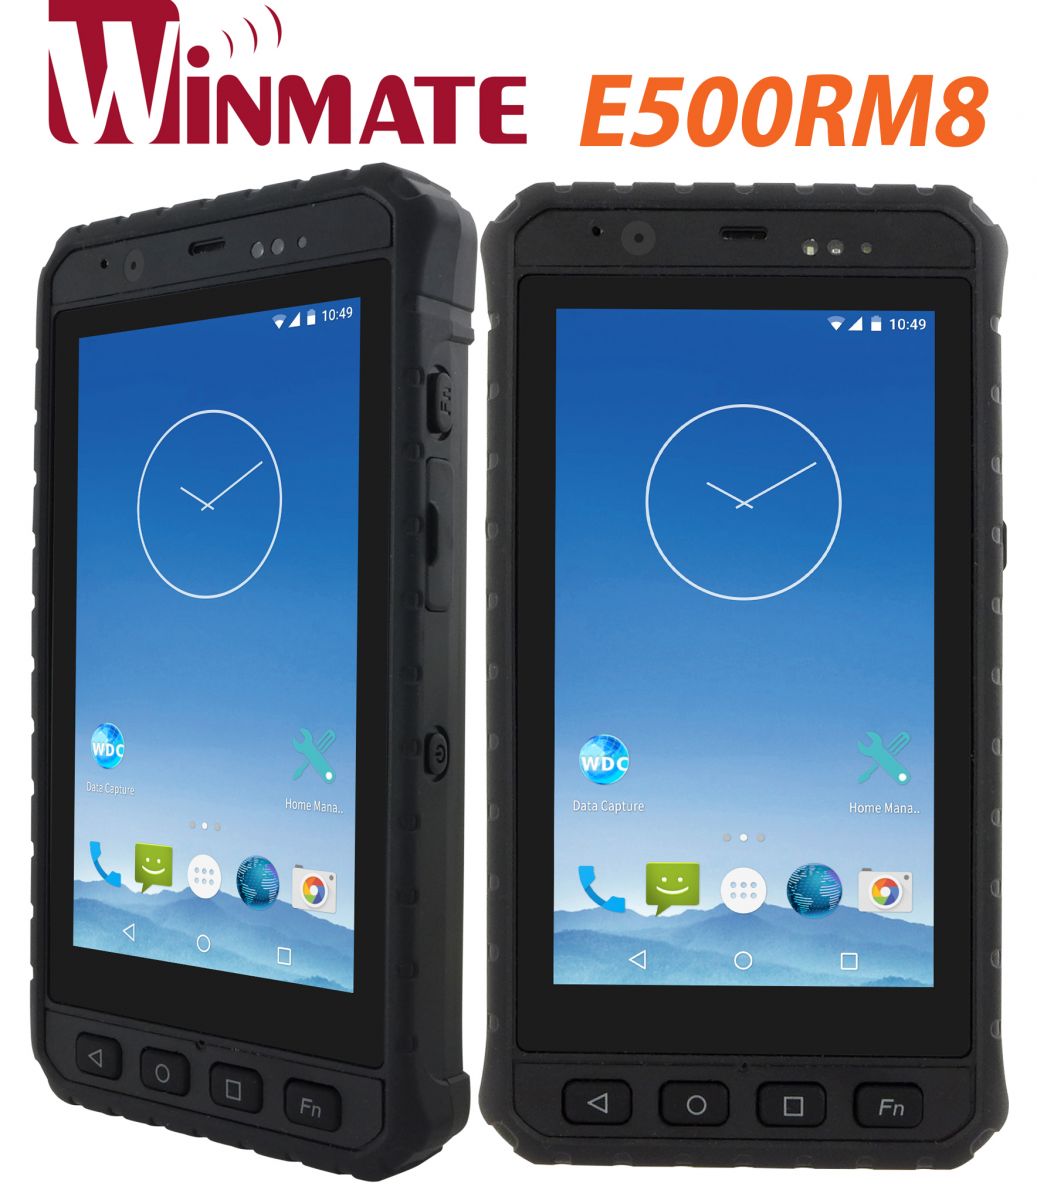 Mobile Industrial Data Collector WINMATE E500RM8 umpc mobilator